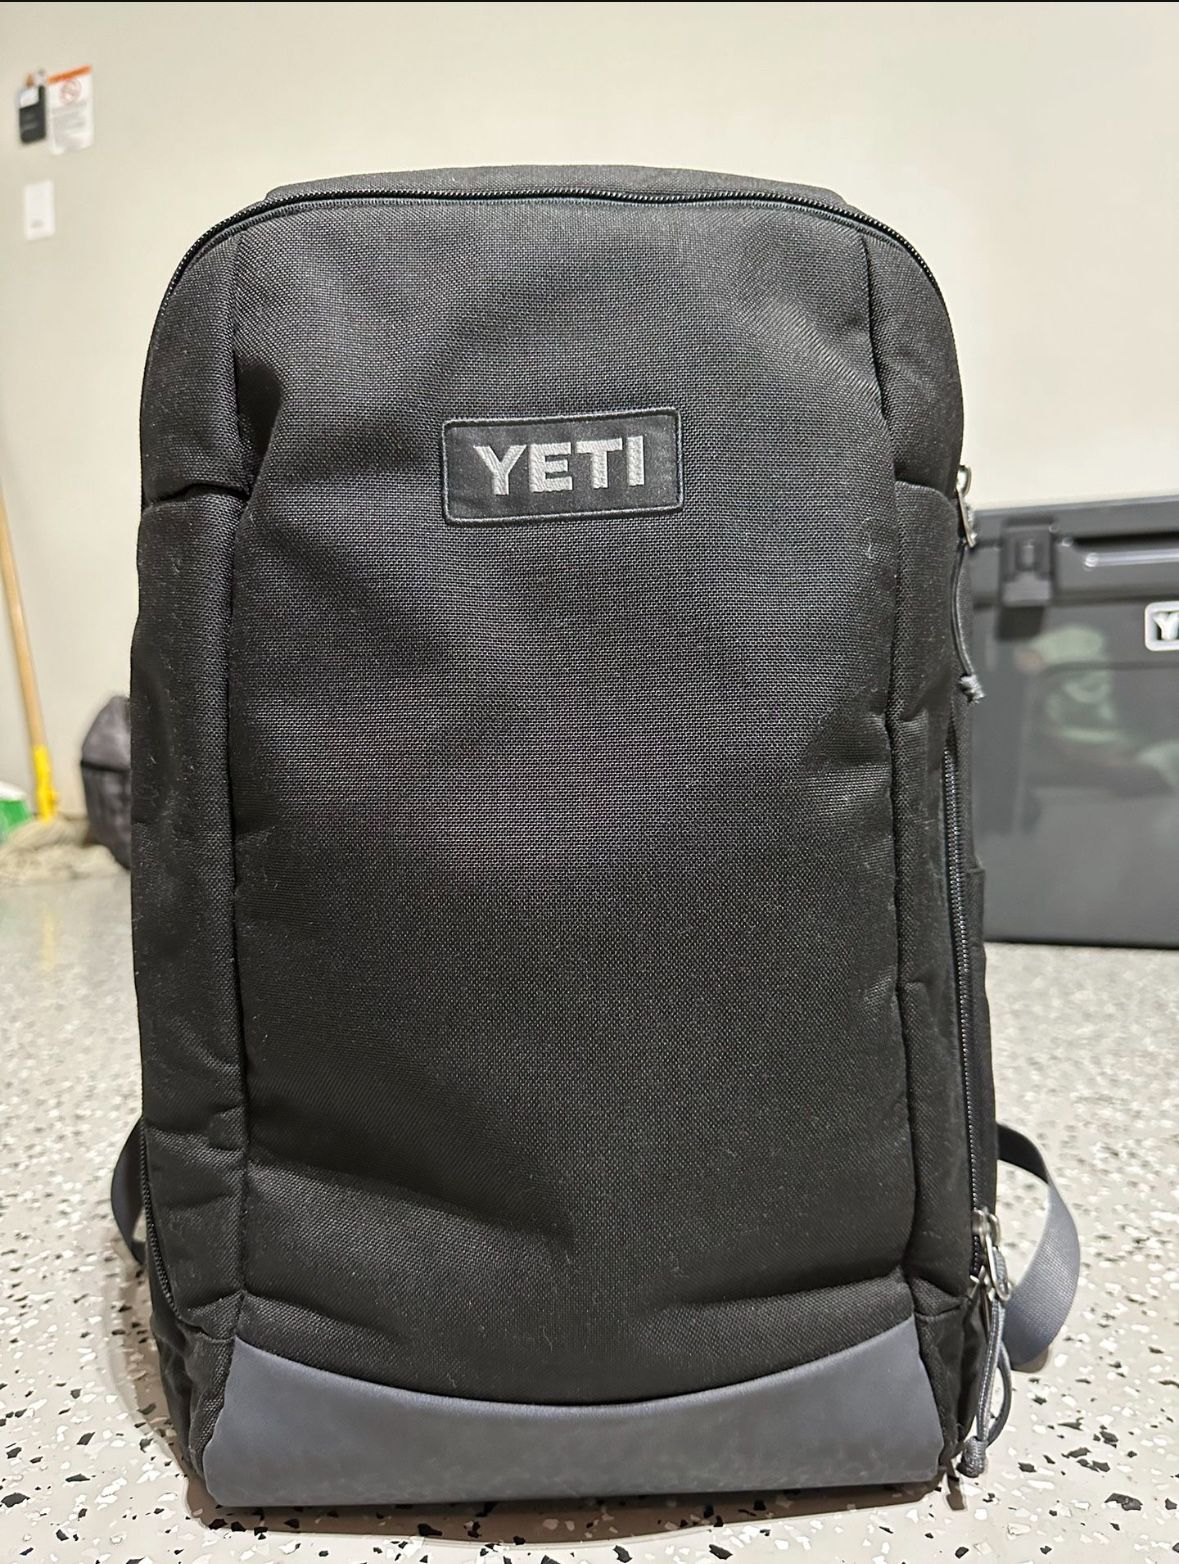 Yeti Backpack (Black)